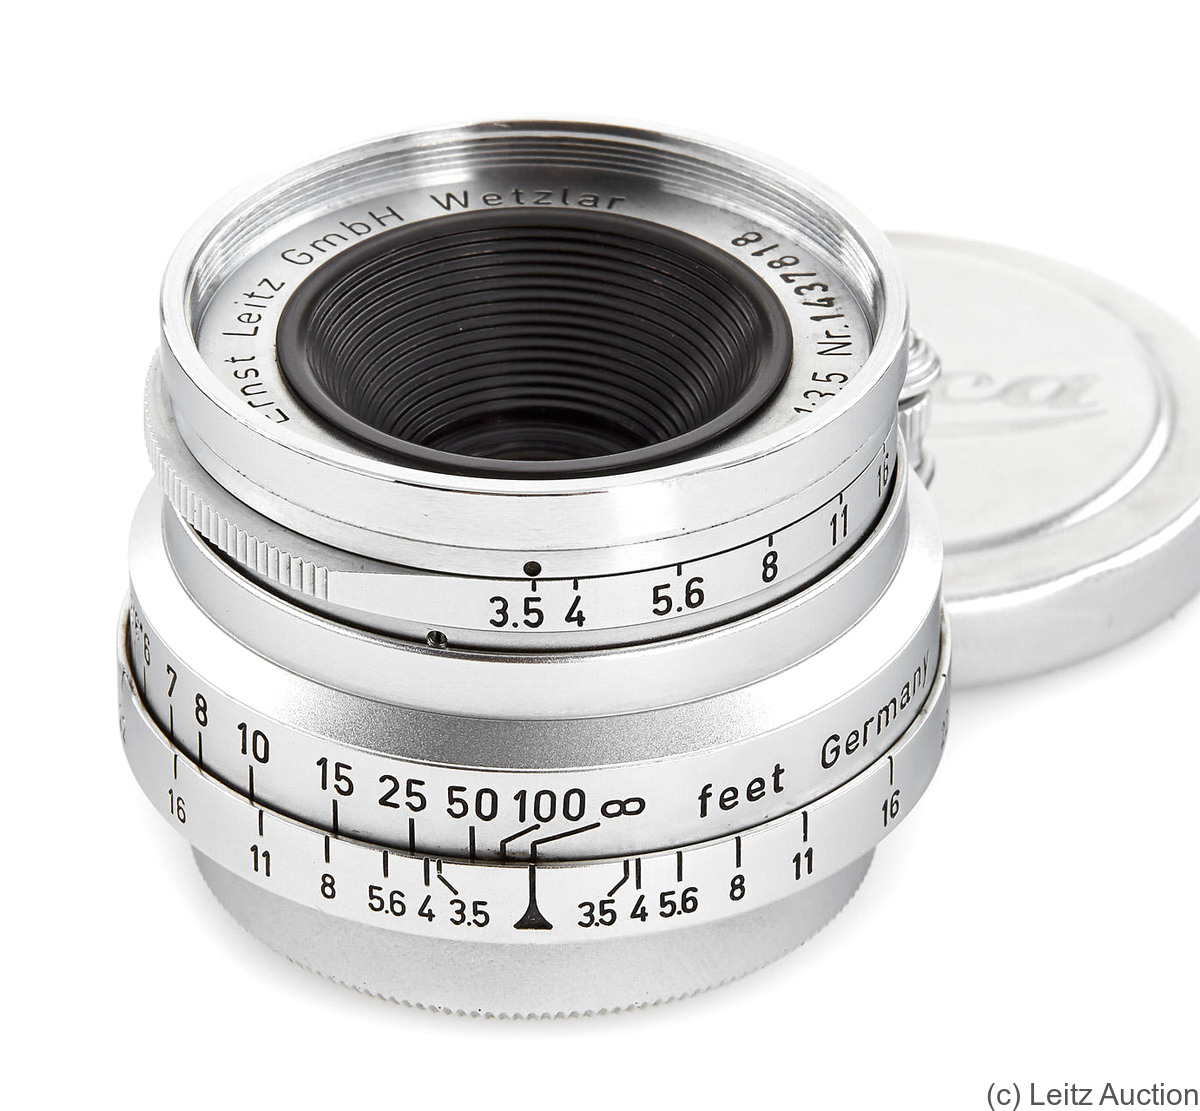 Leitz: 35mm (3.5cm) f3.5 Summaron (SM, late) camera